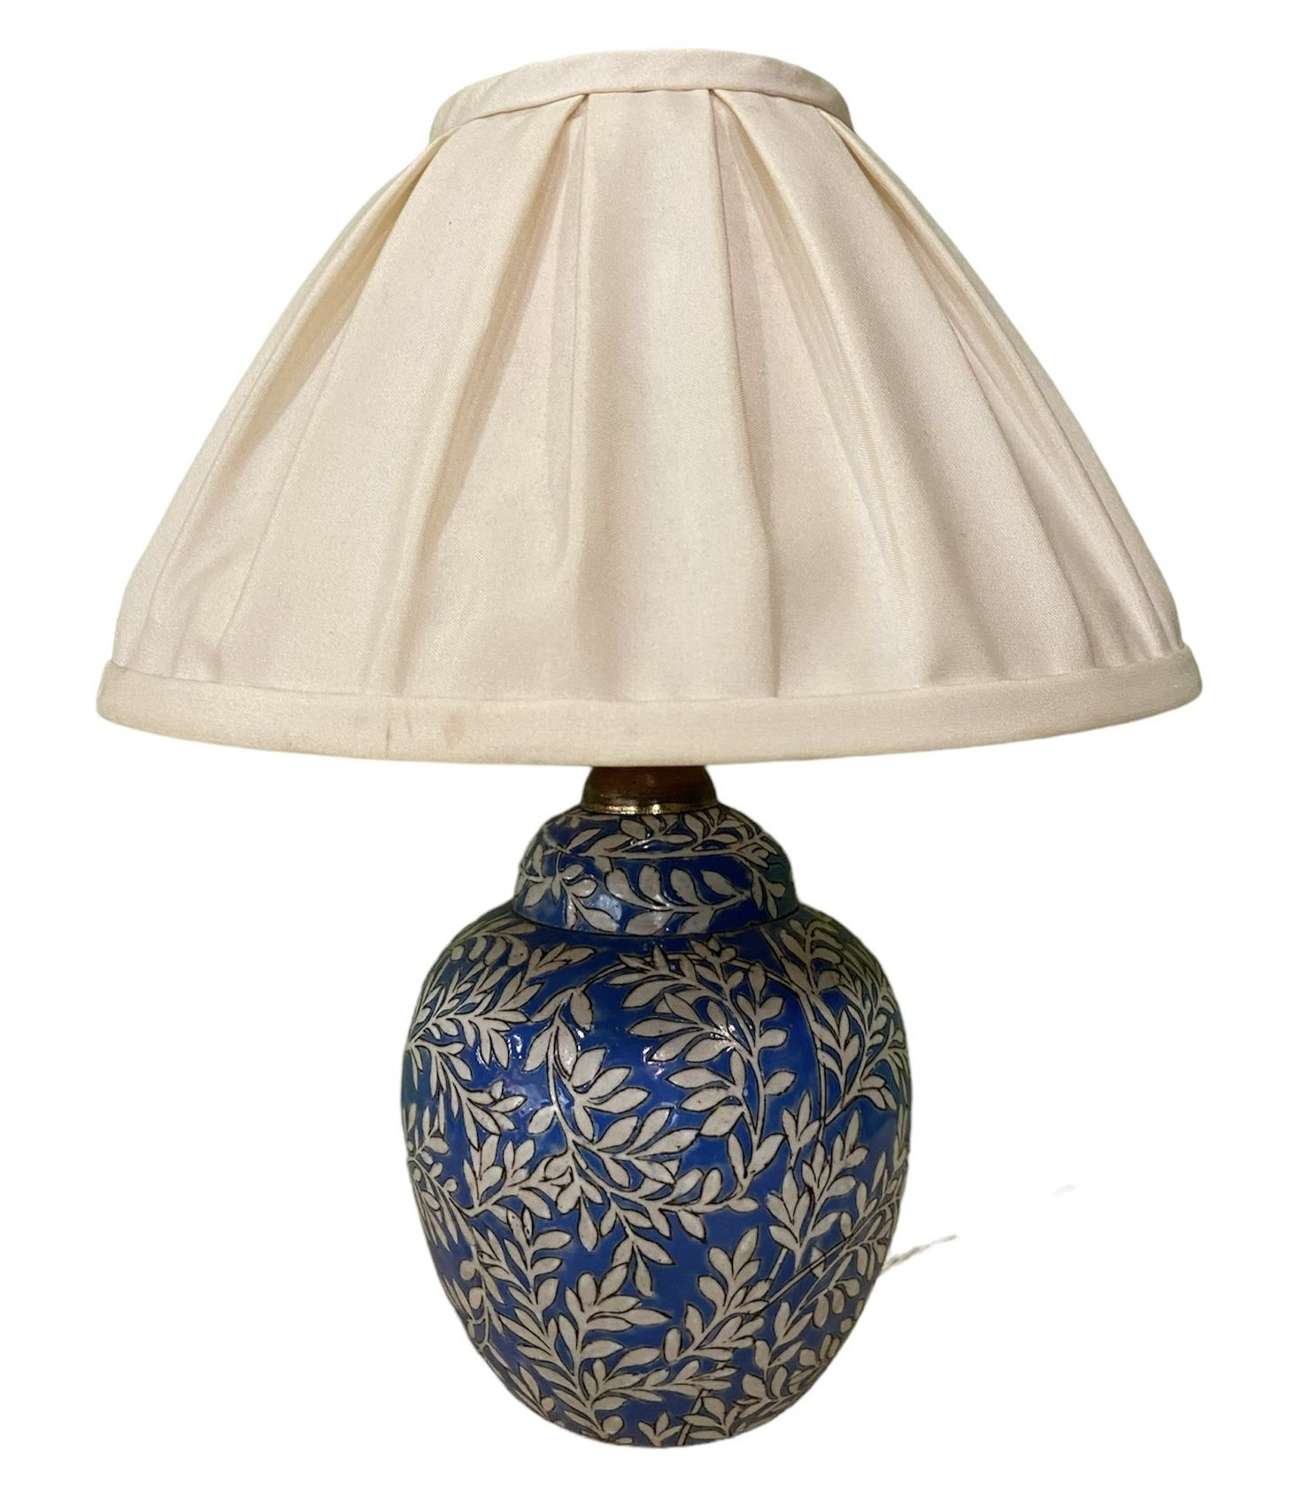 Small ceramic table lamp